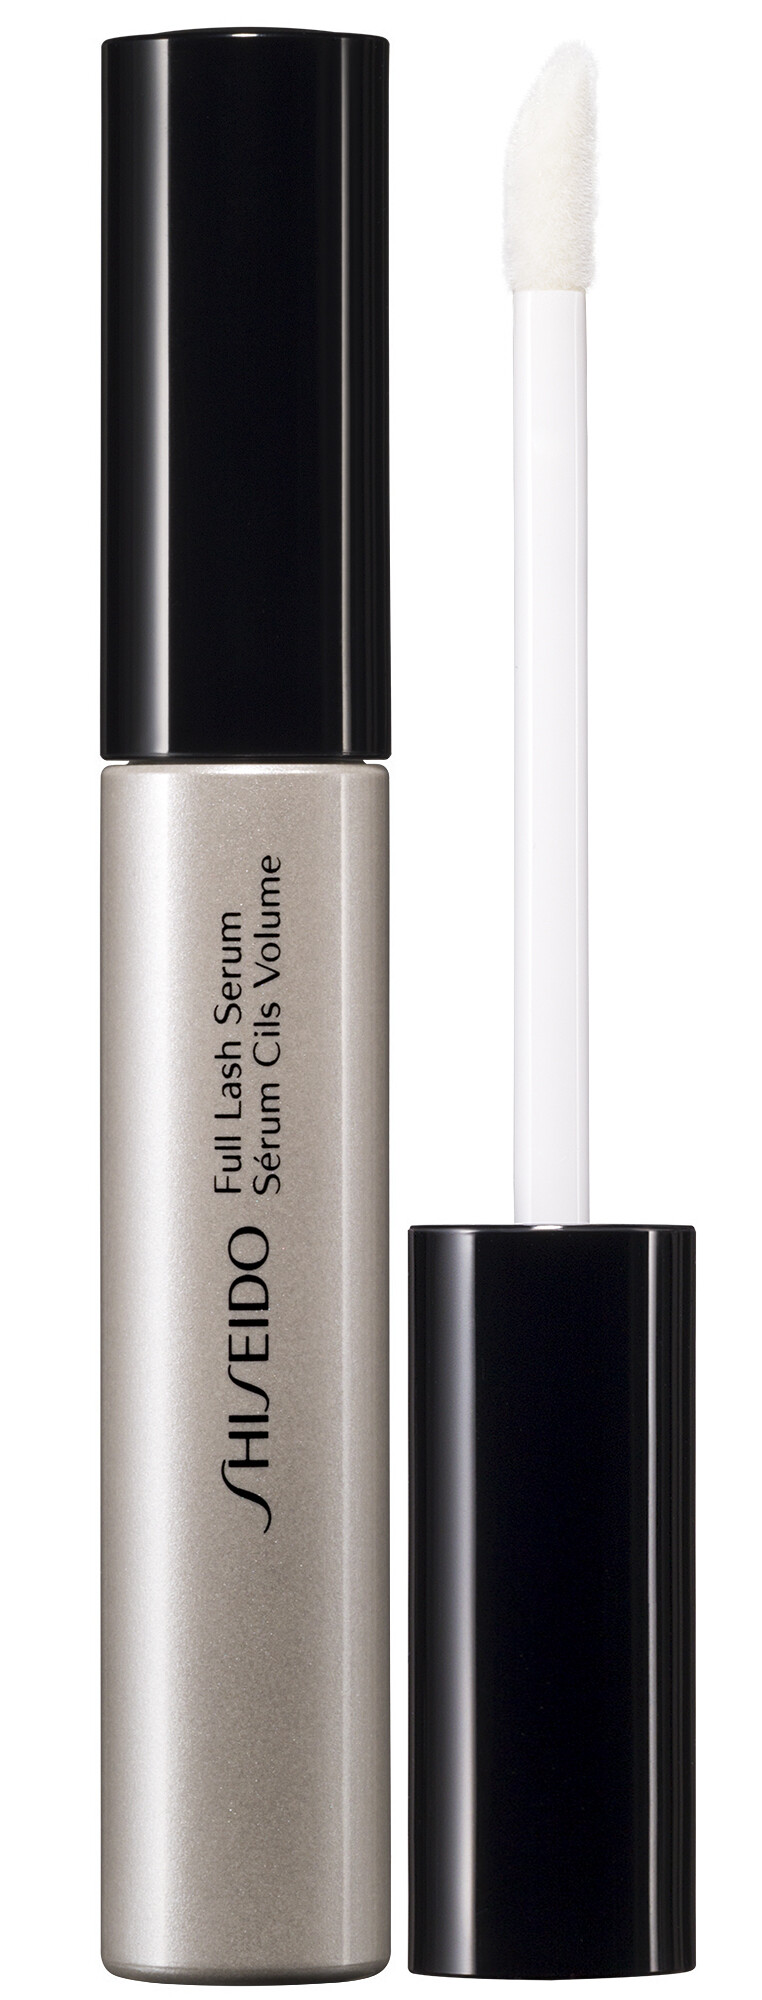 Serum Shiseido Makeup Full Lash Serum 6ml Thiemann